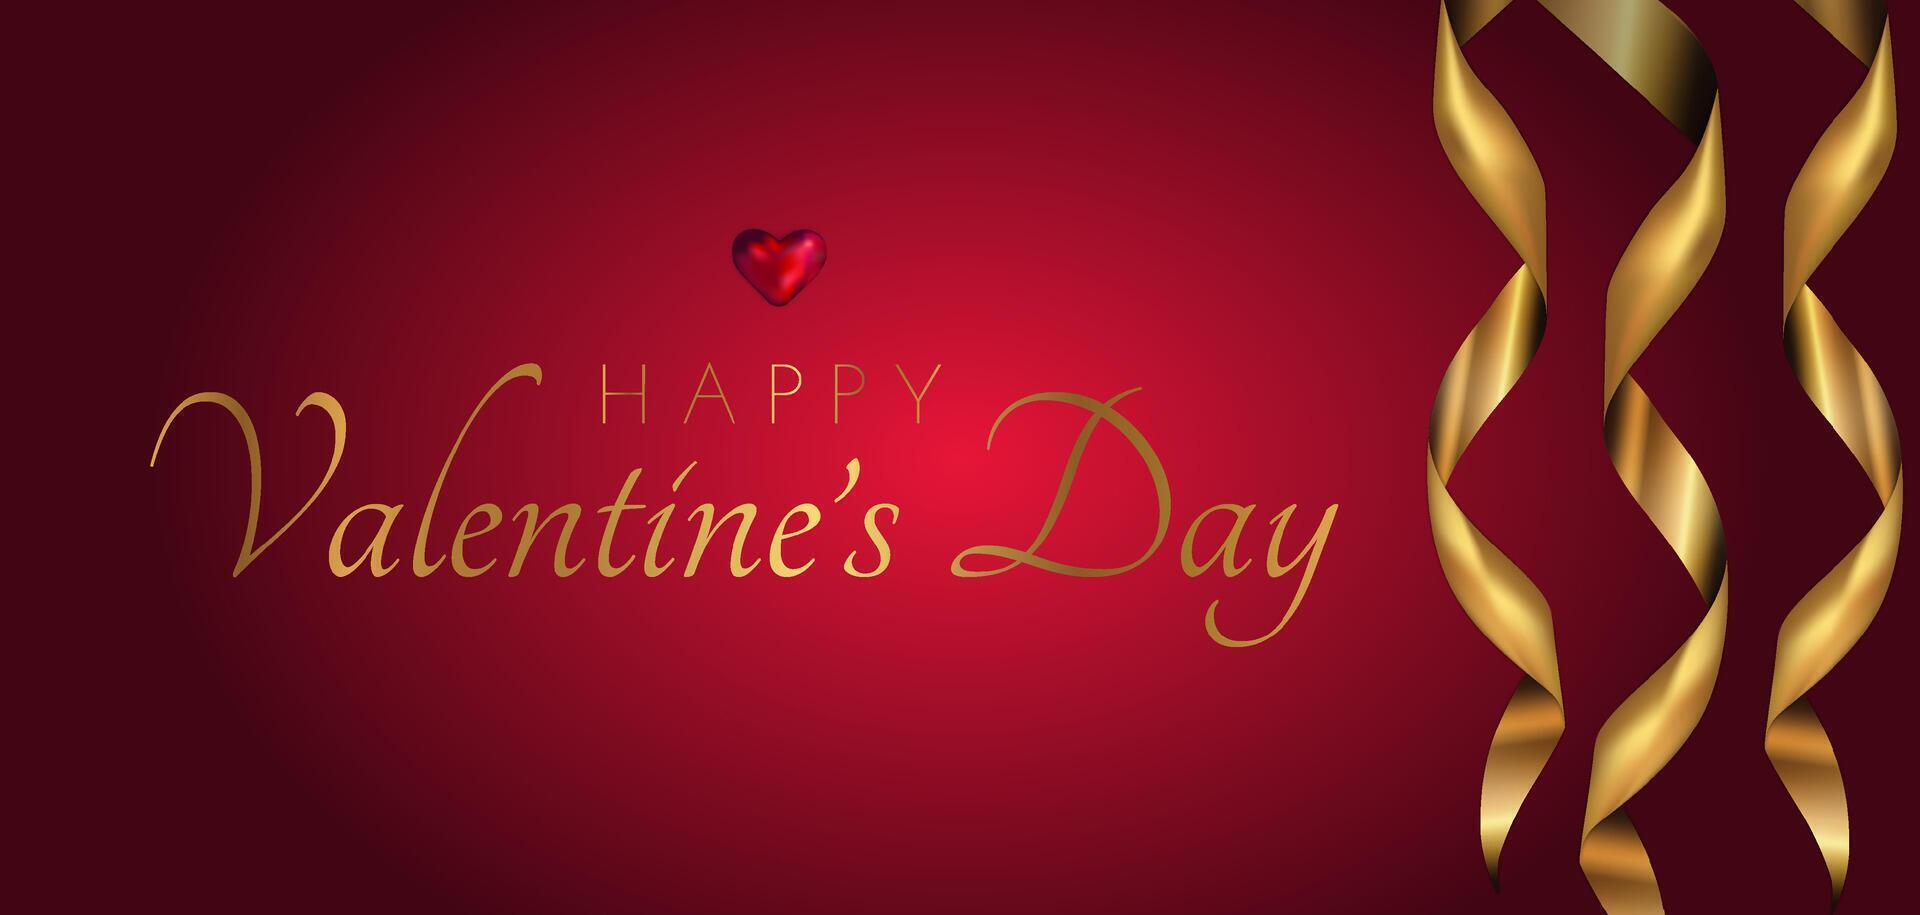 Happy Valentine Day Minimal Red Background Illustration vector